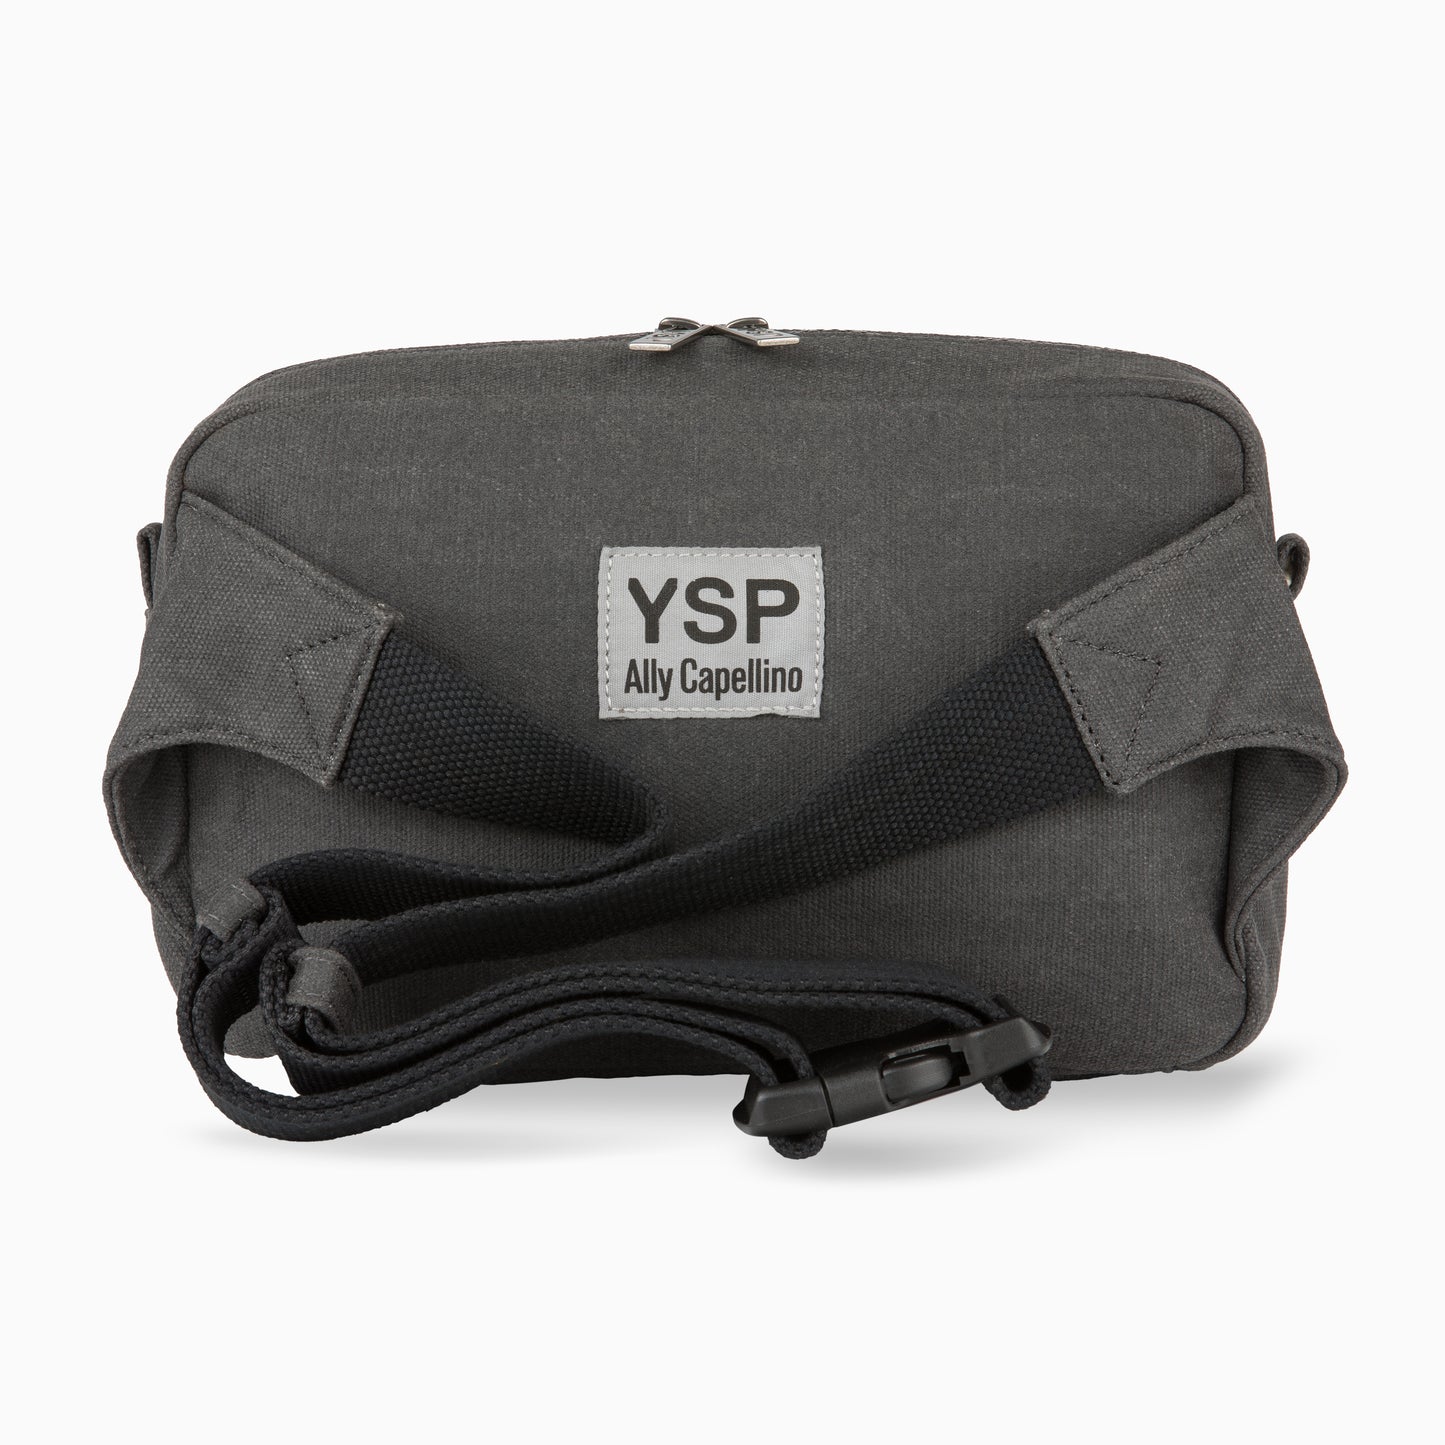 Ally Capellino x YSP Crossbody Bag